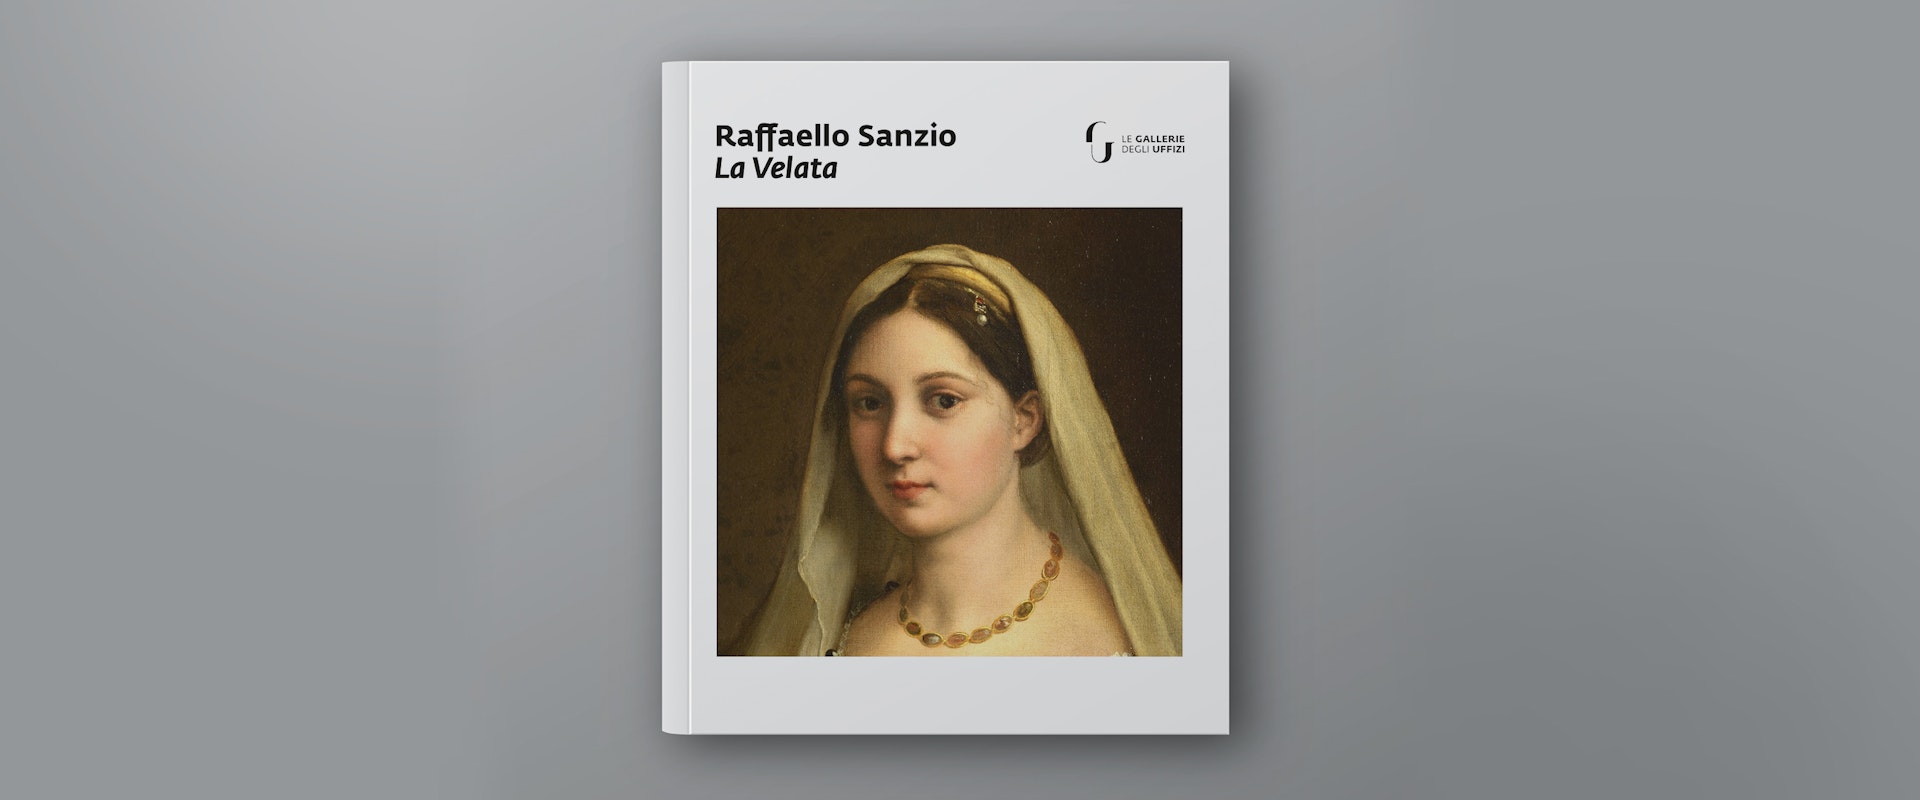 Raffaello Sanzio, La Velata | Libro Tattile